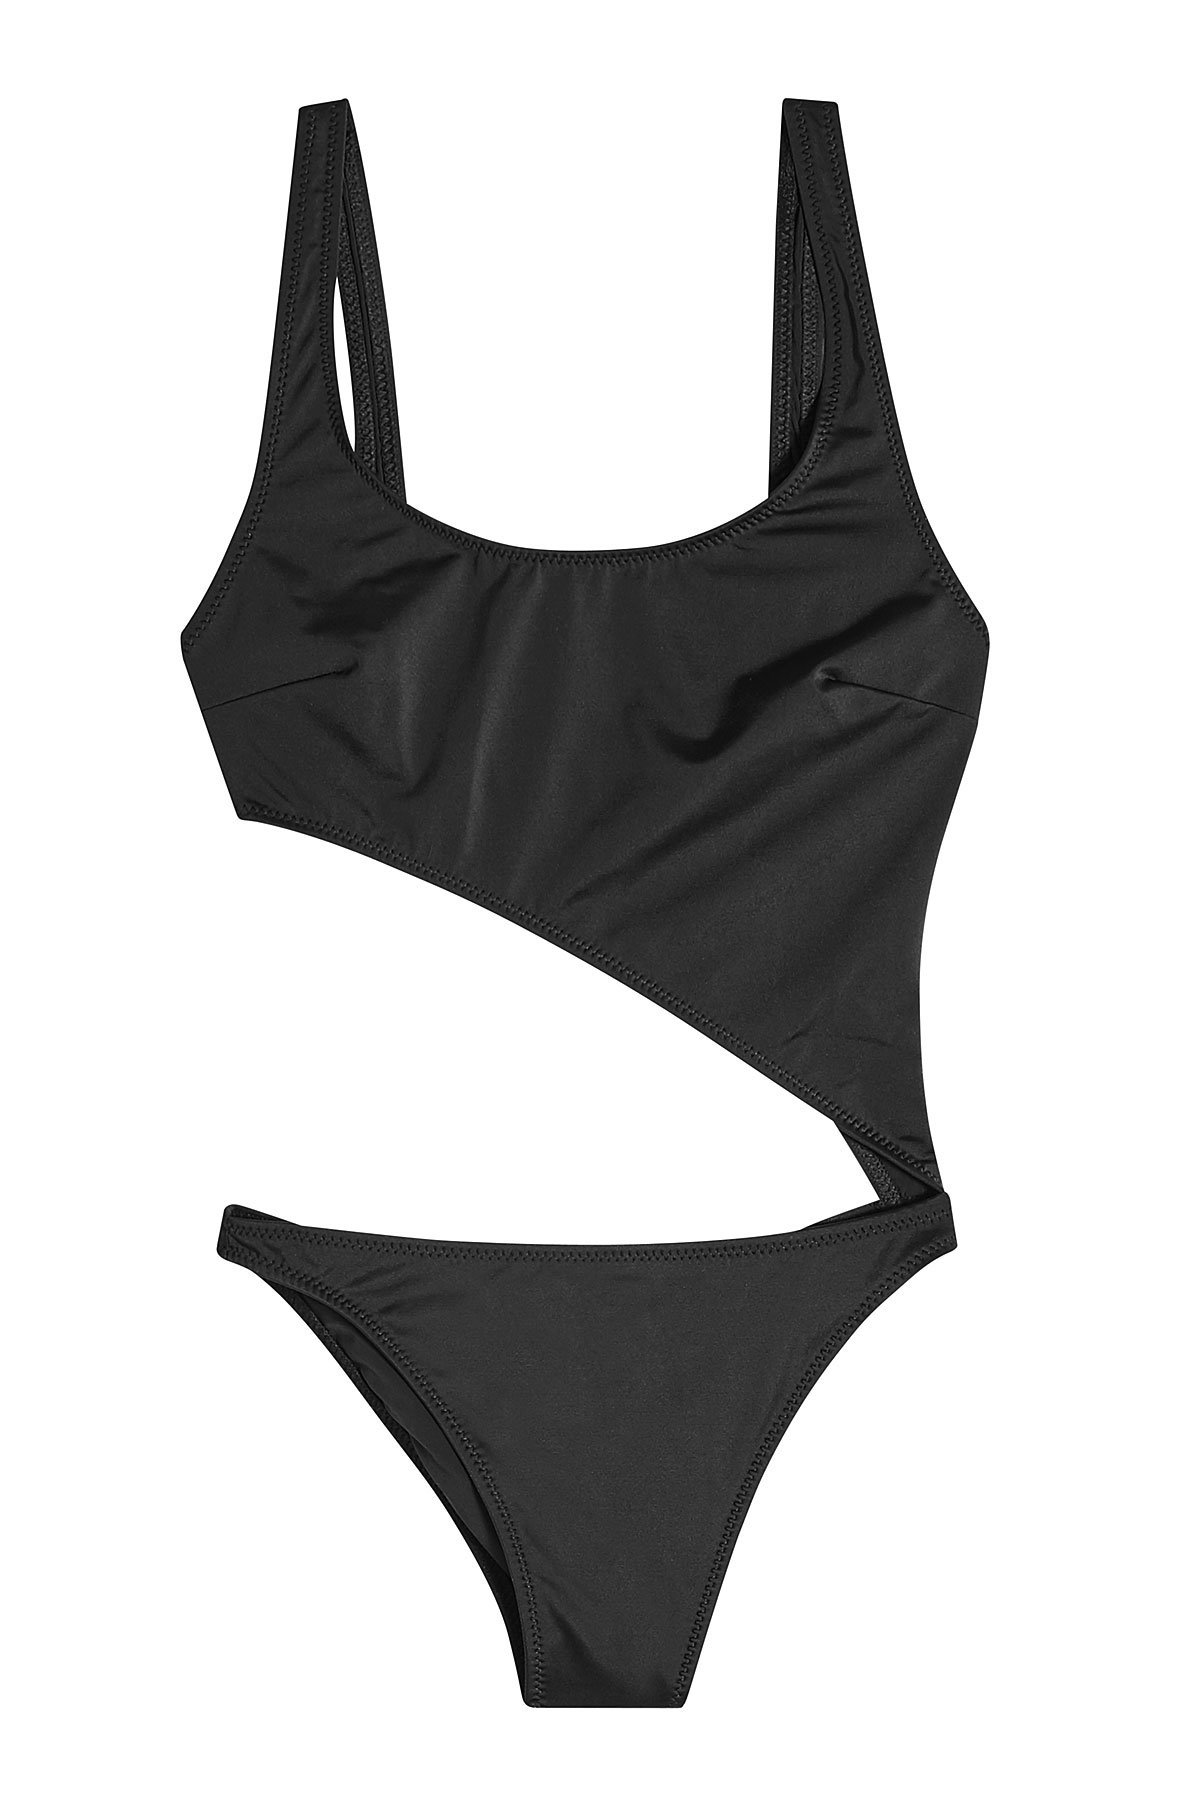 The Jourdan Swimsuit by Solid & Striped